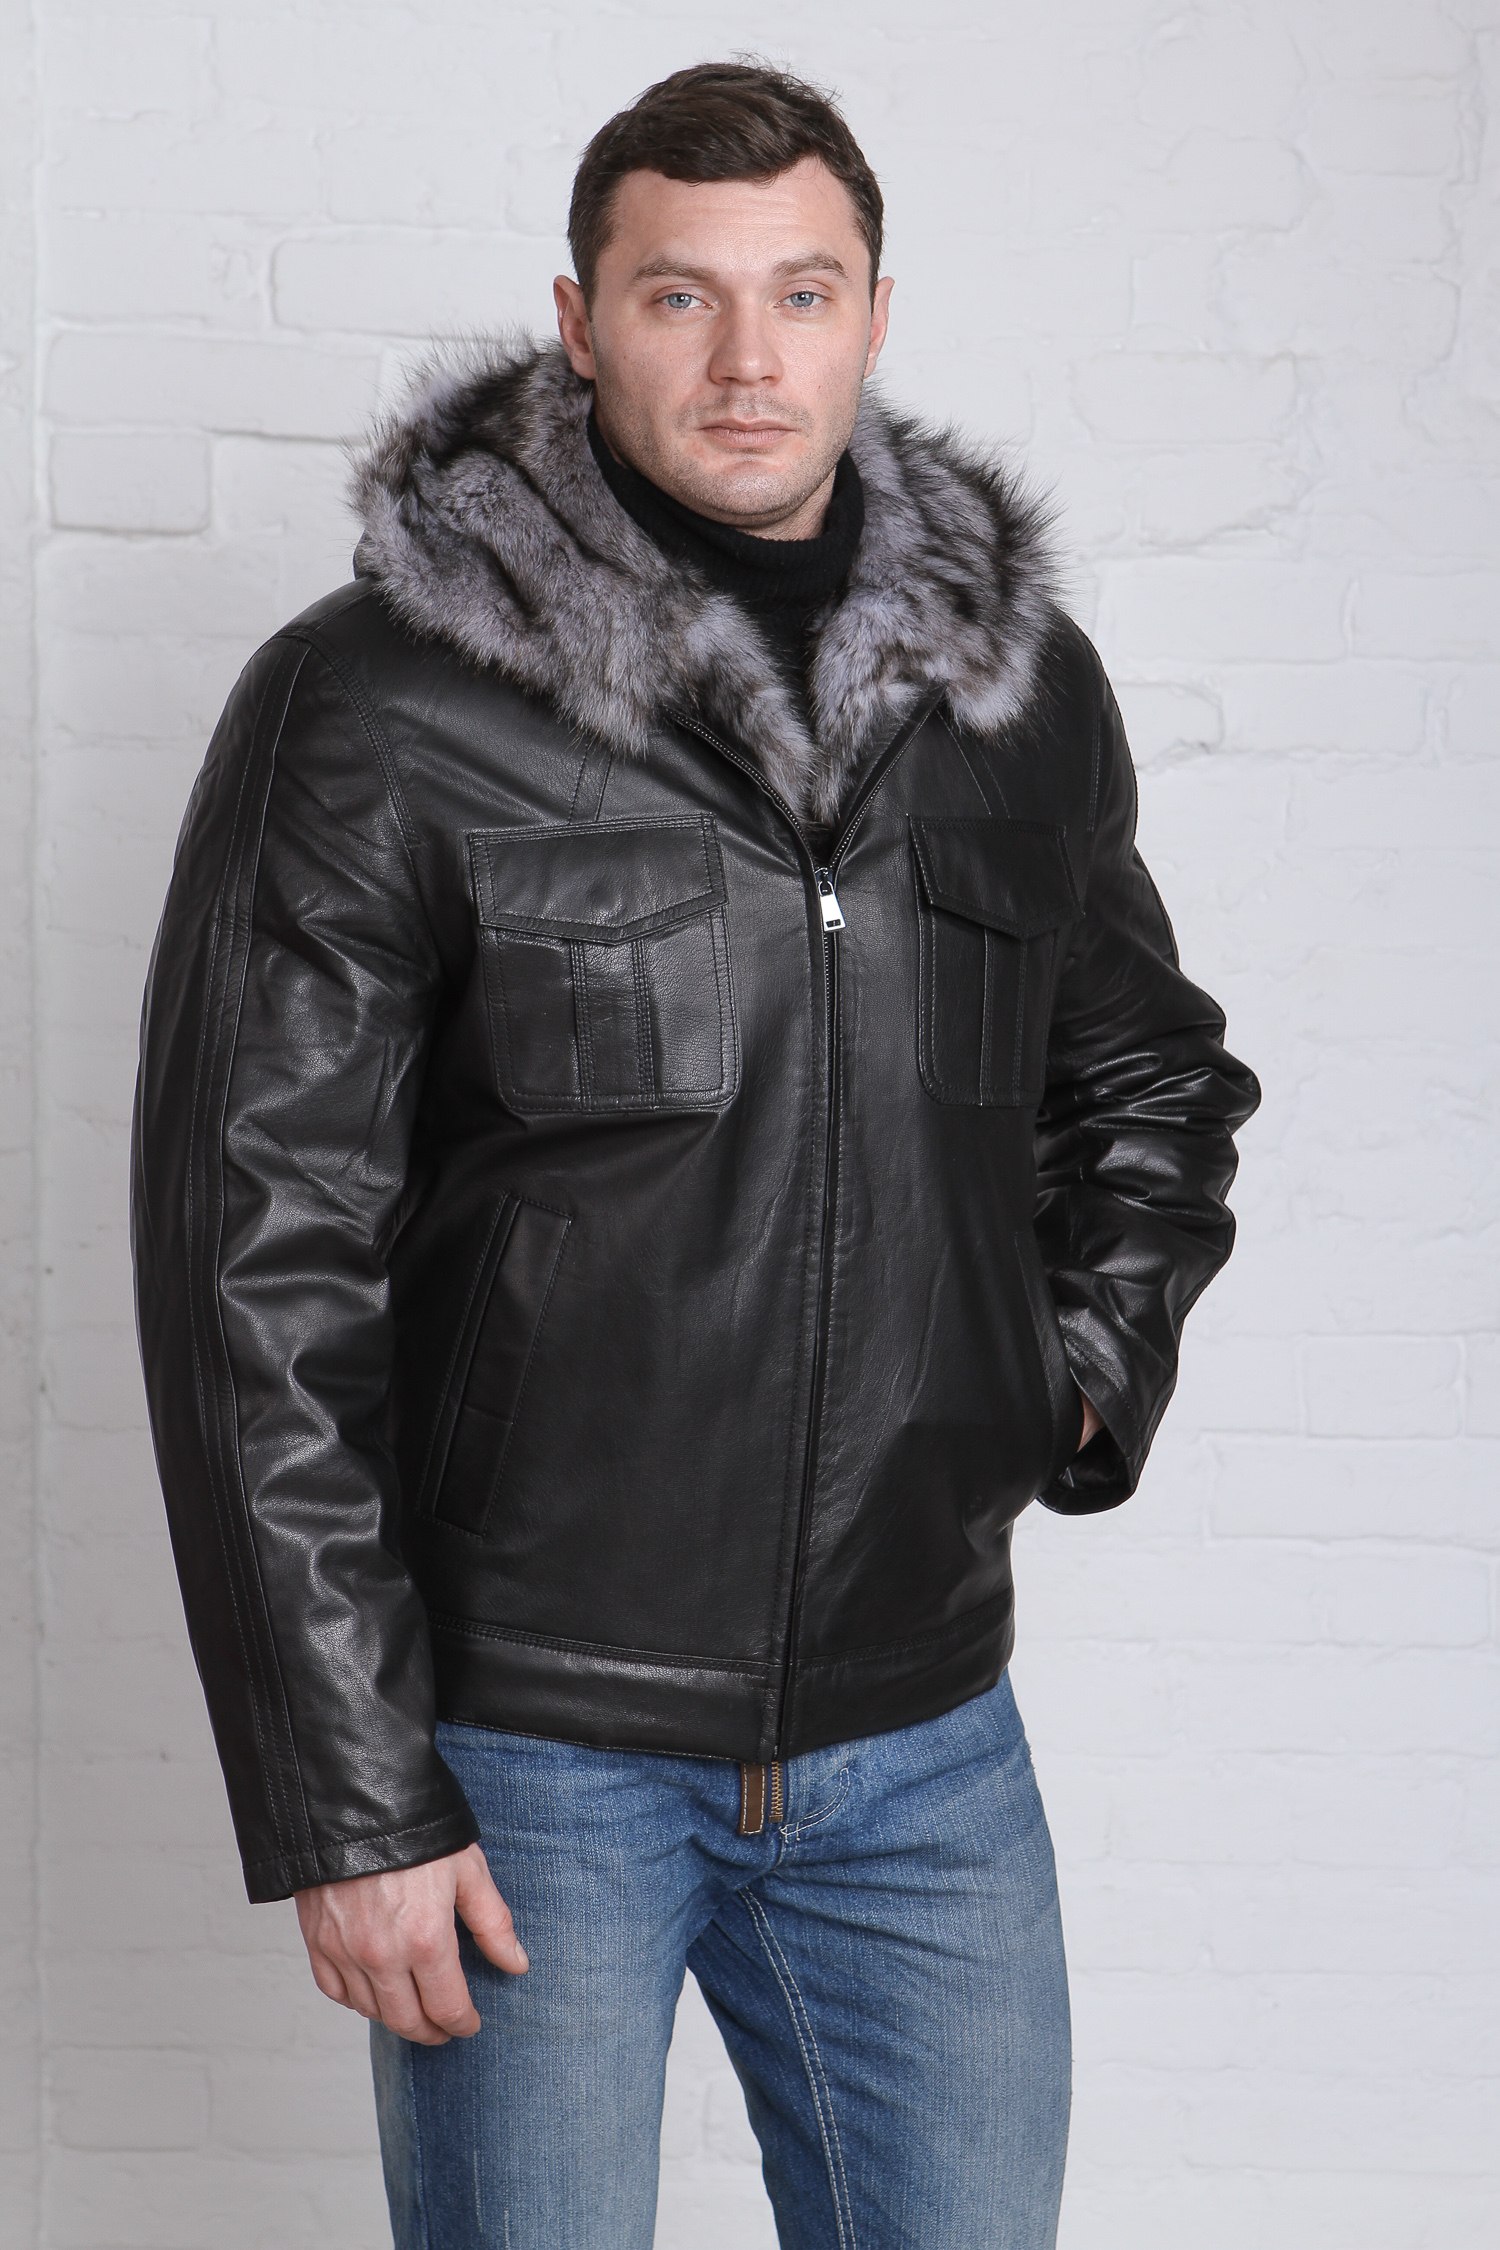 Куртка меховая мужская купить. Куртка мужская зимняя кожаная артикул "Вояджер_зима" 70 размер. Кожаная куртка с мехом мужская. Зимние кожаные куртки мужские с мехом. Кожанка с мехом мужская.